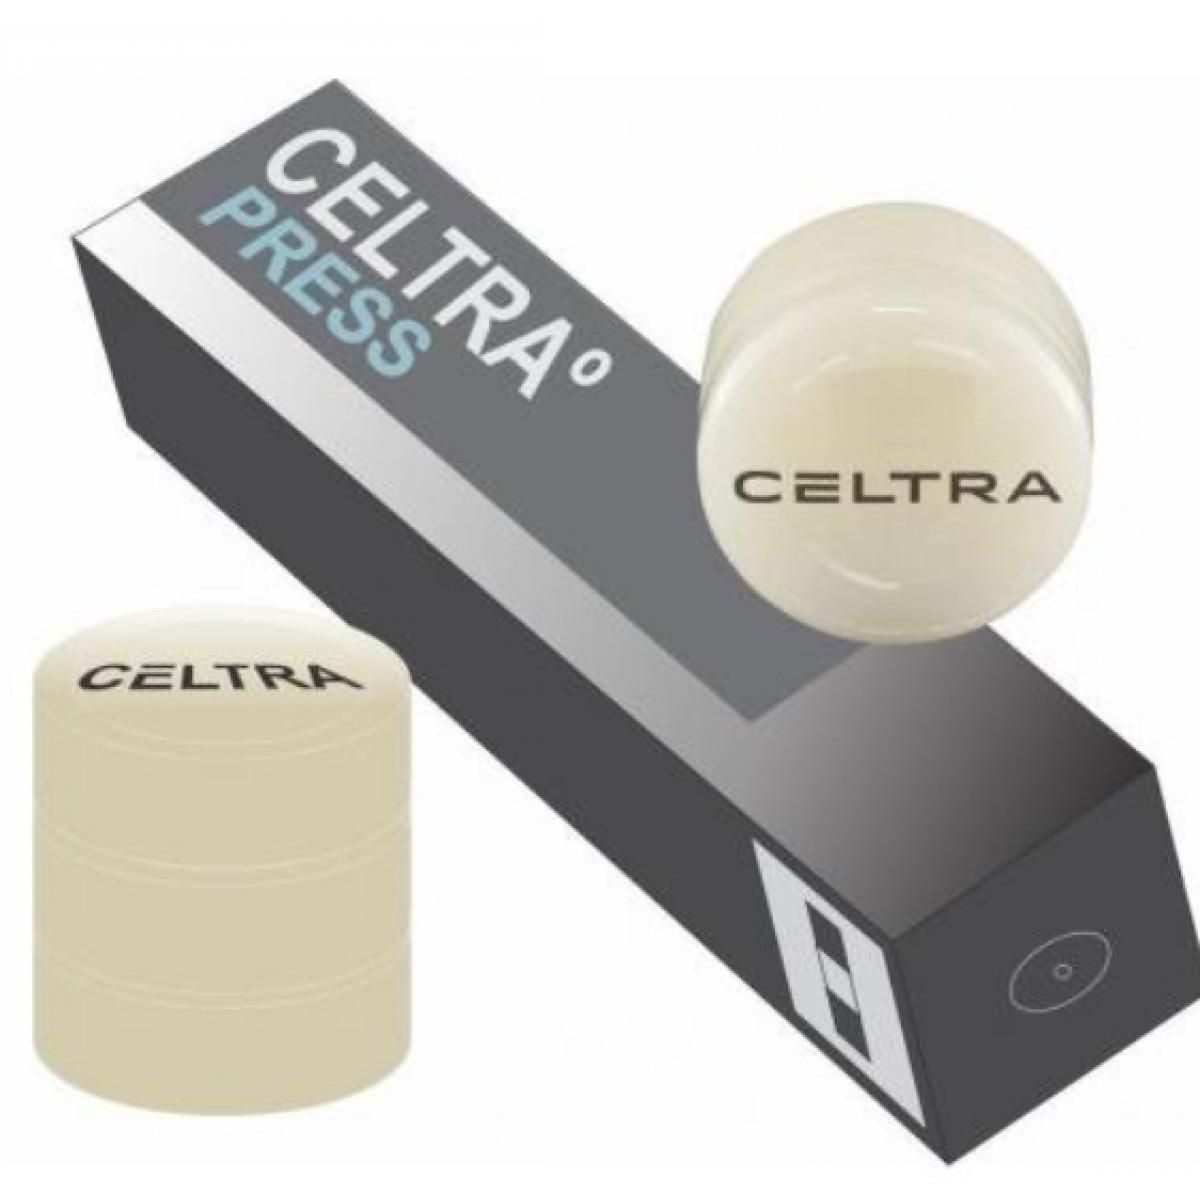 CELTRA PRESS LT A2 5 X 3 GR DENTSPLY -